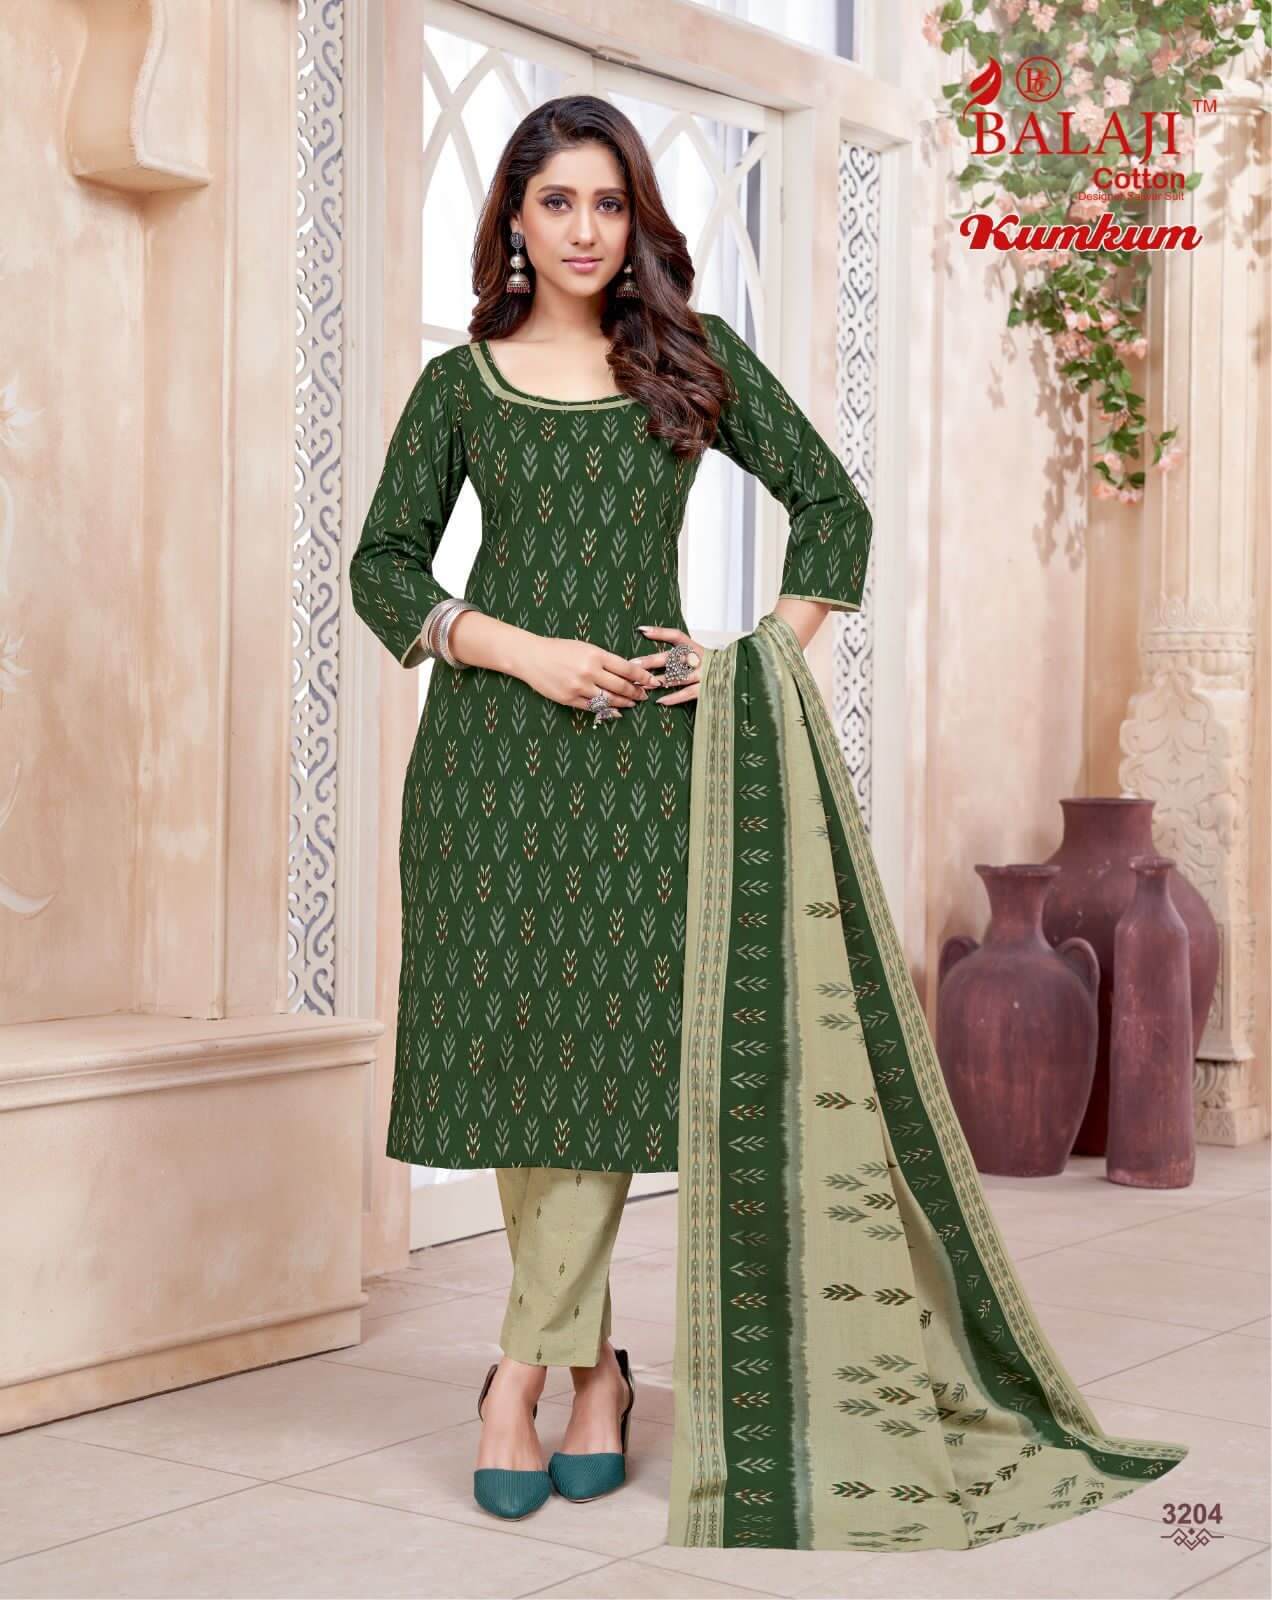 Balaji Cotton Kumkum Vol 32 A Readymade Dress collection 5